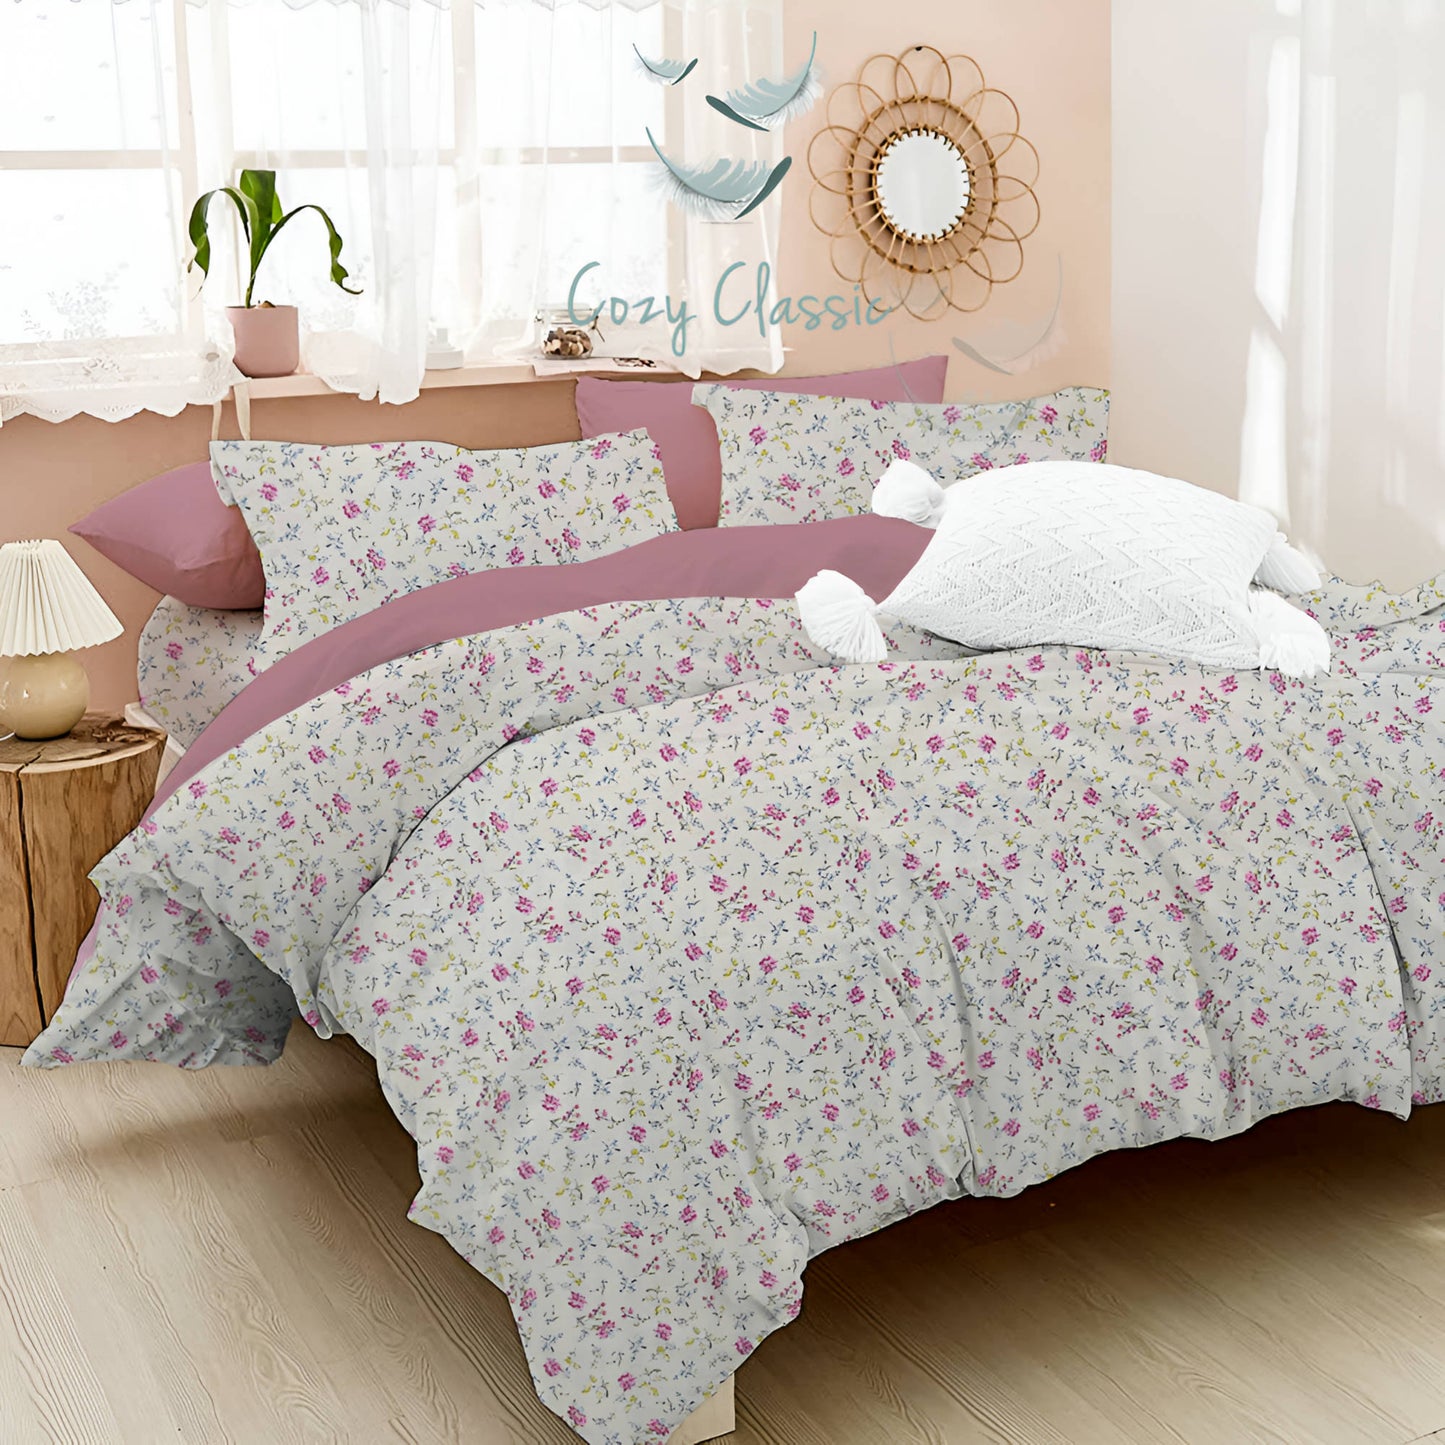 cotton bedsheets